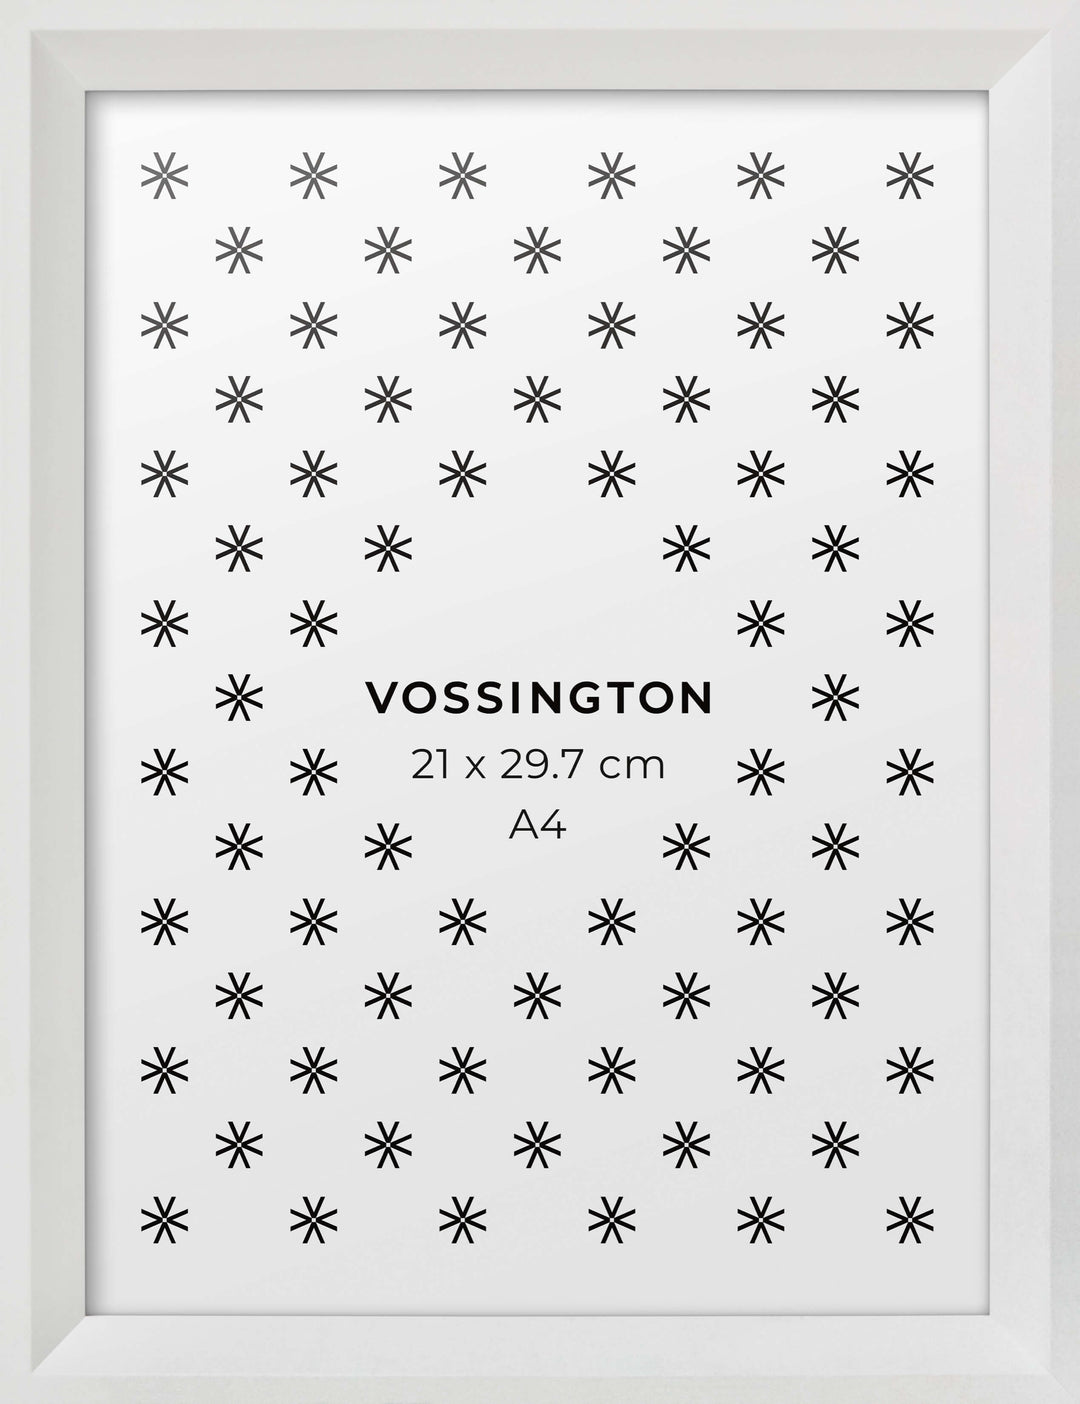 Classic Picture Frame, White, 40x60 cm (16x24 in) - Vossington